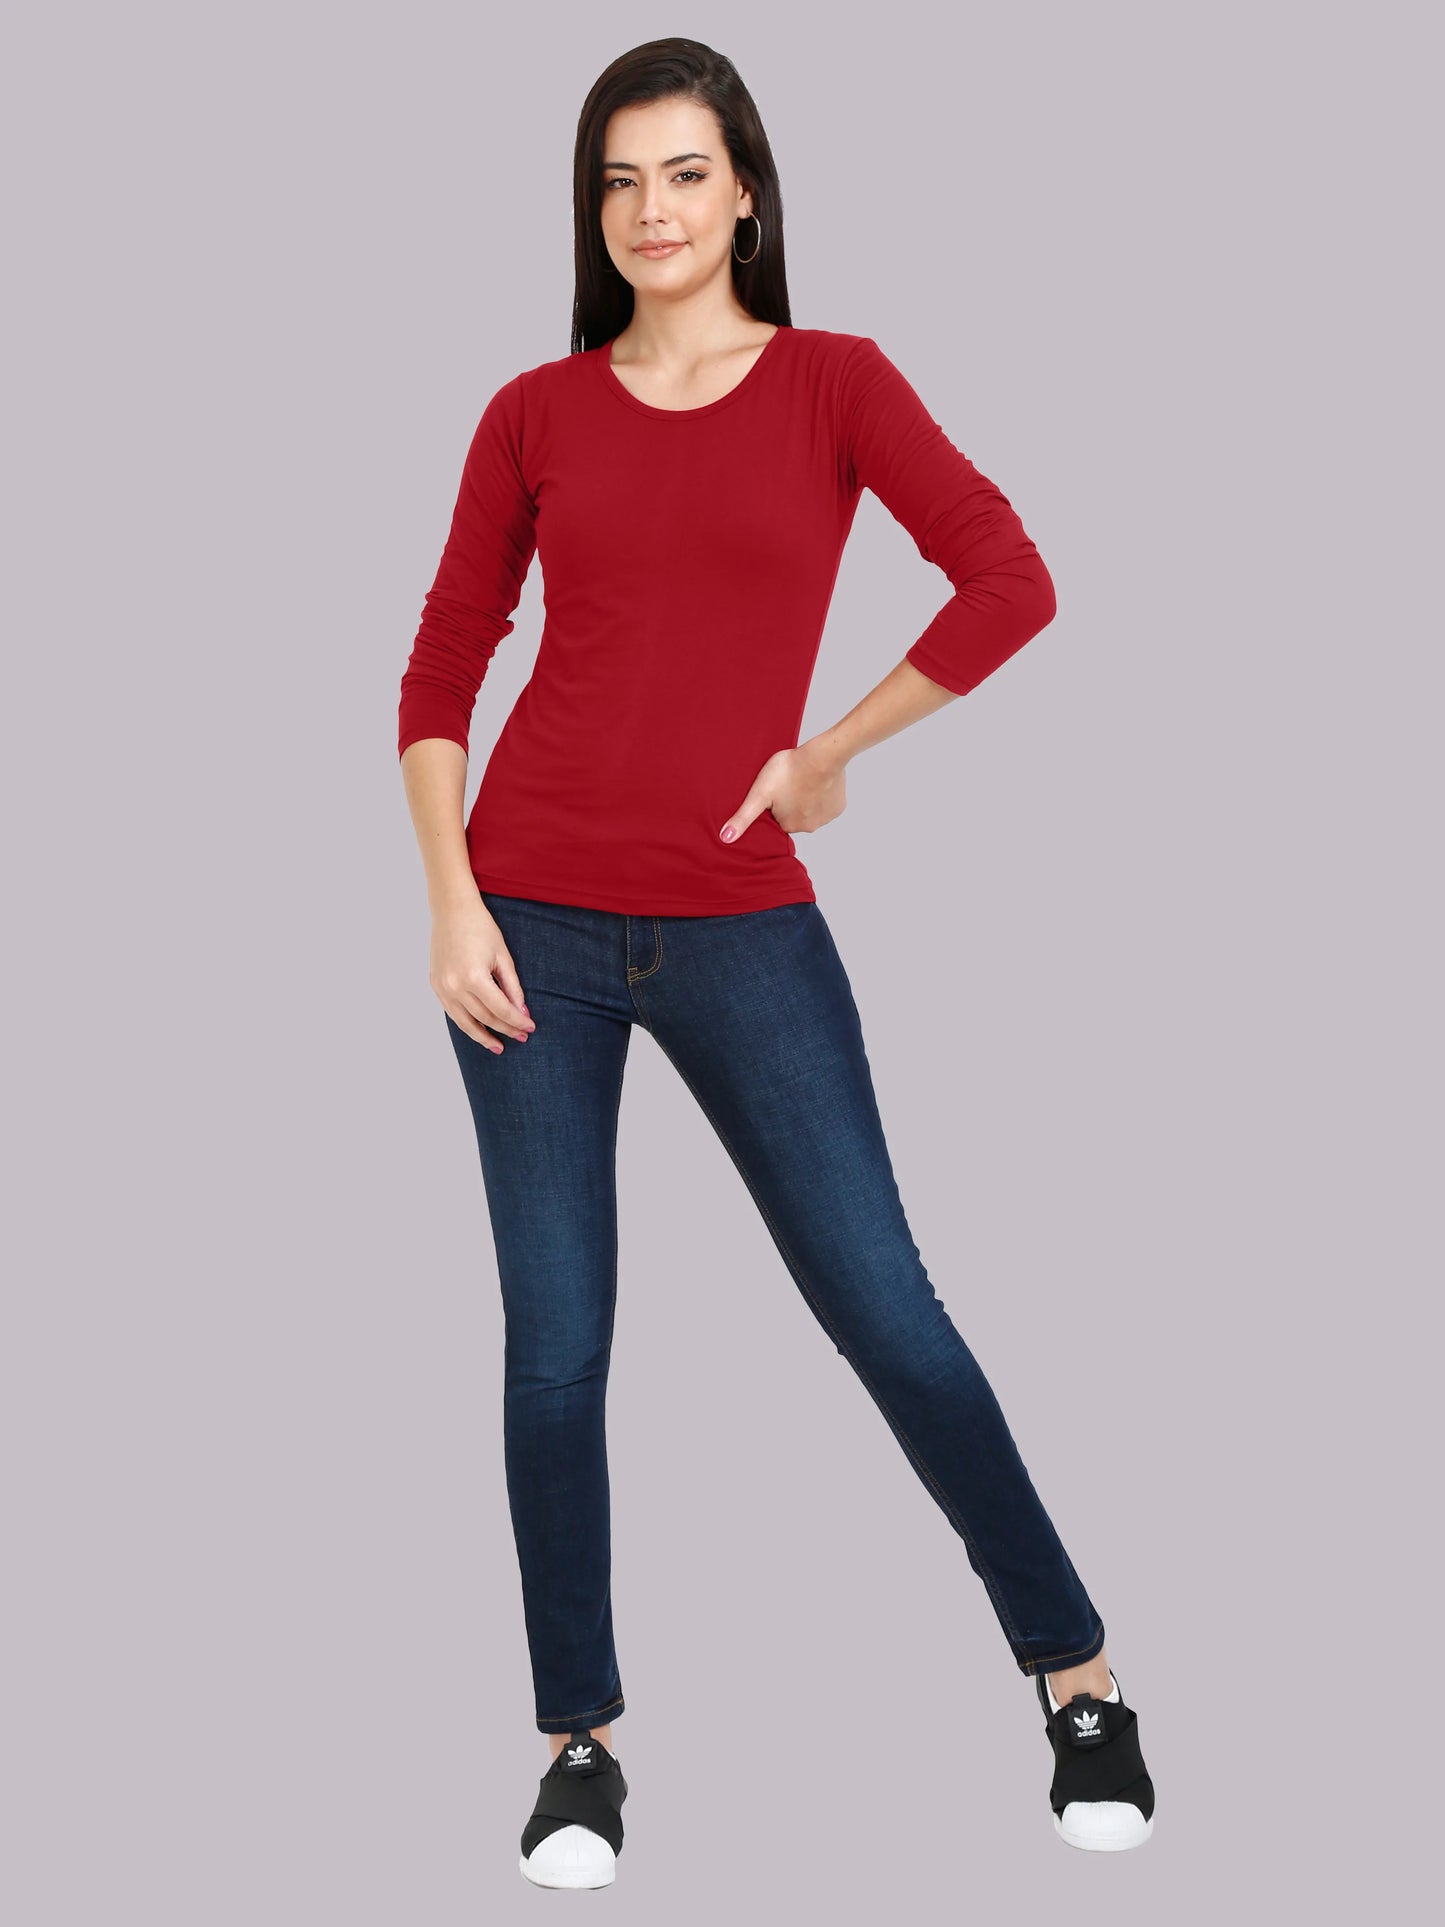 Women's Cotton Plain Round Neck Full Sleeve Maroon Color T-Shirt